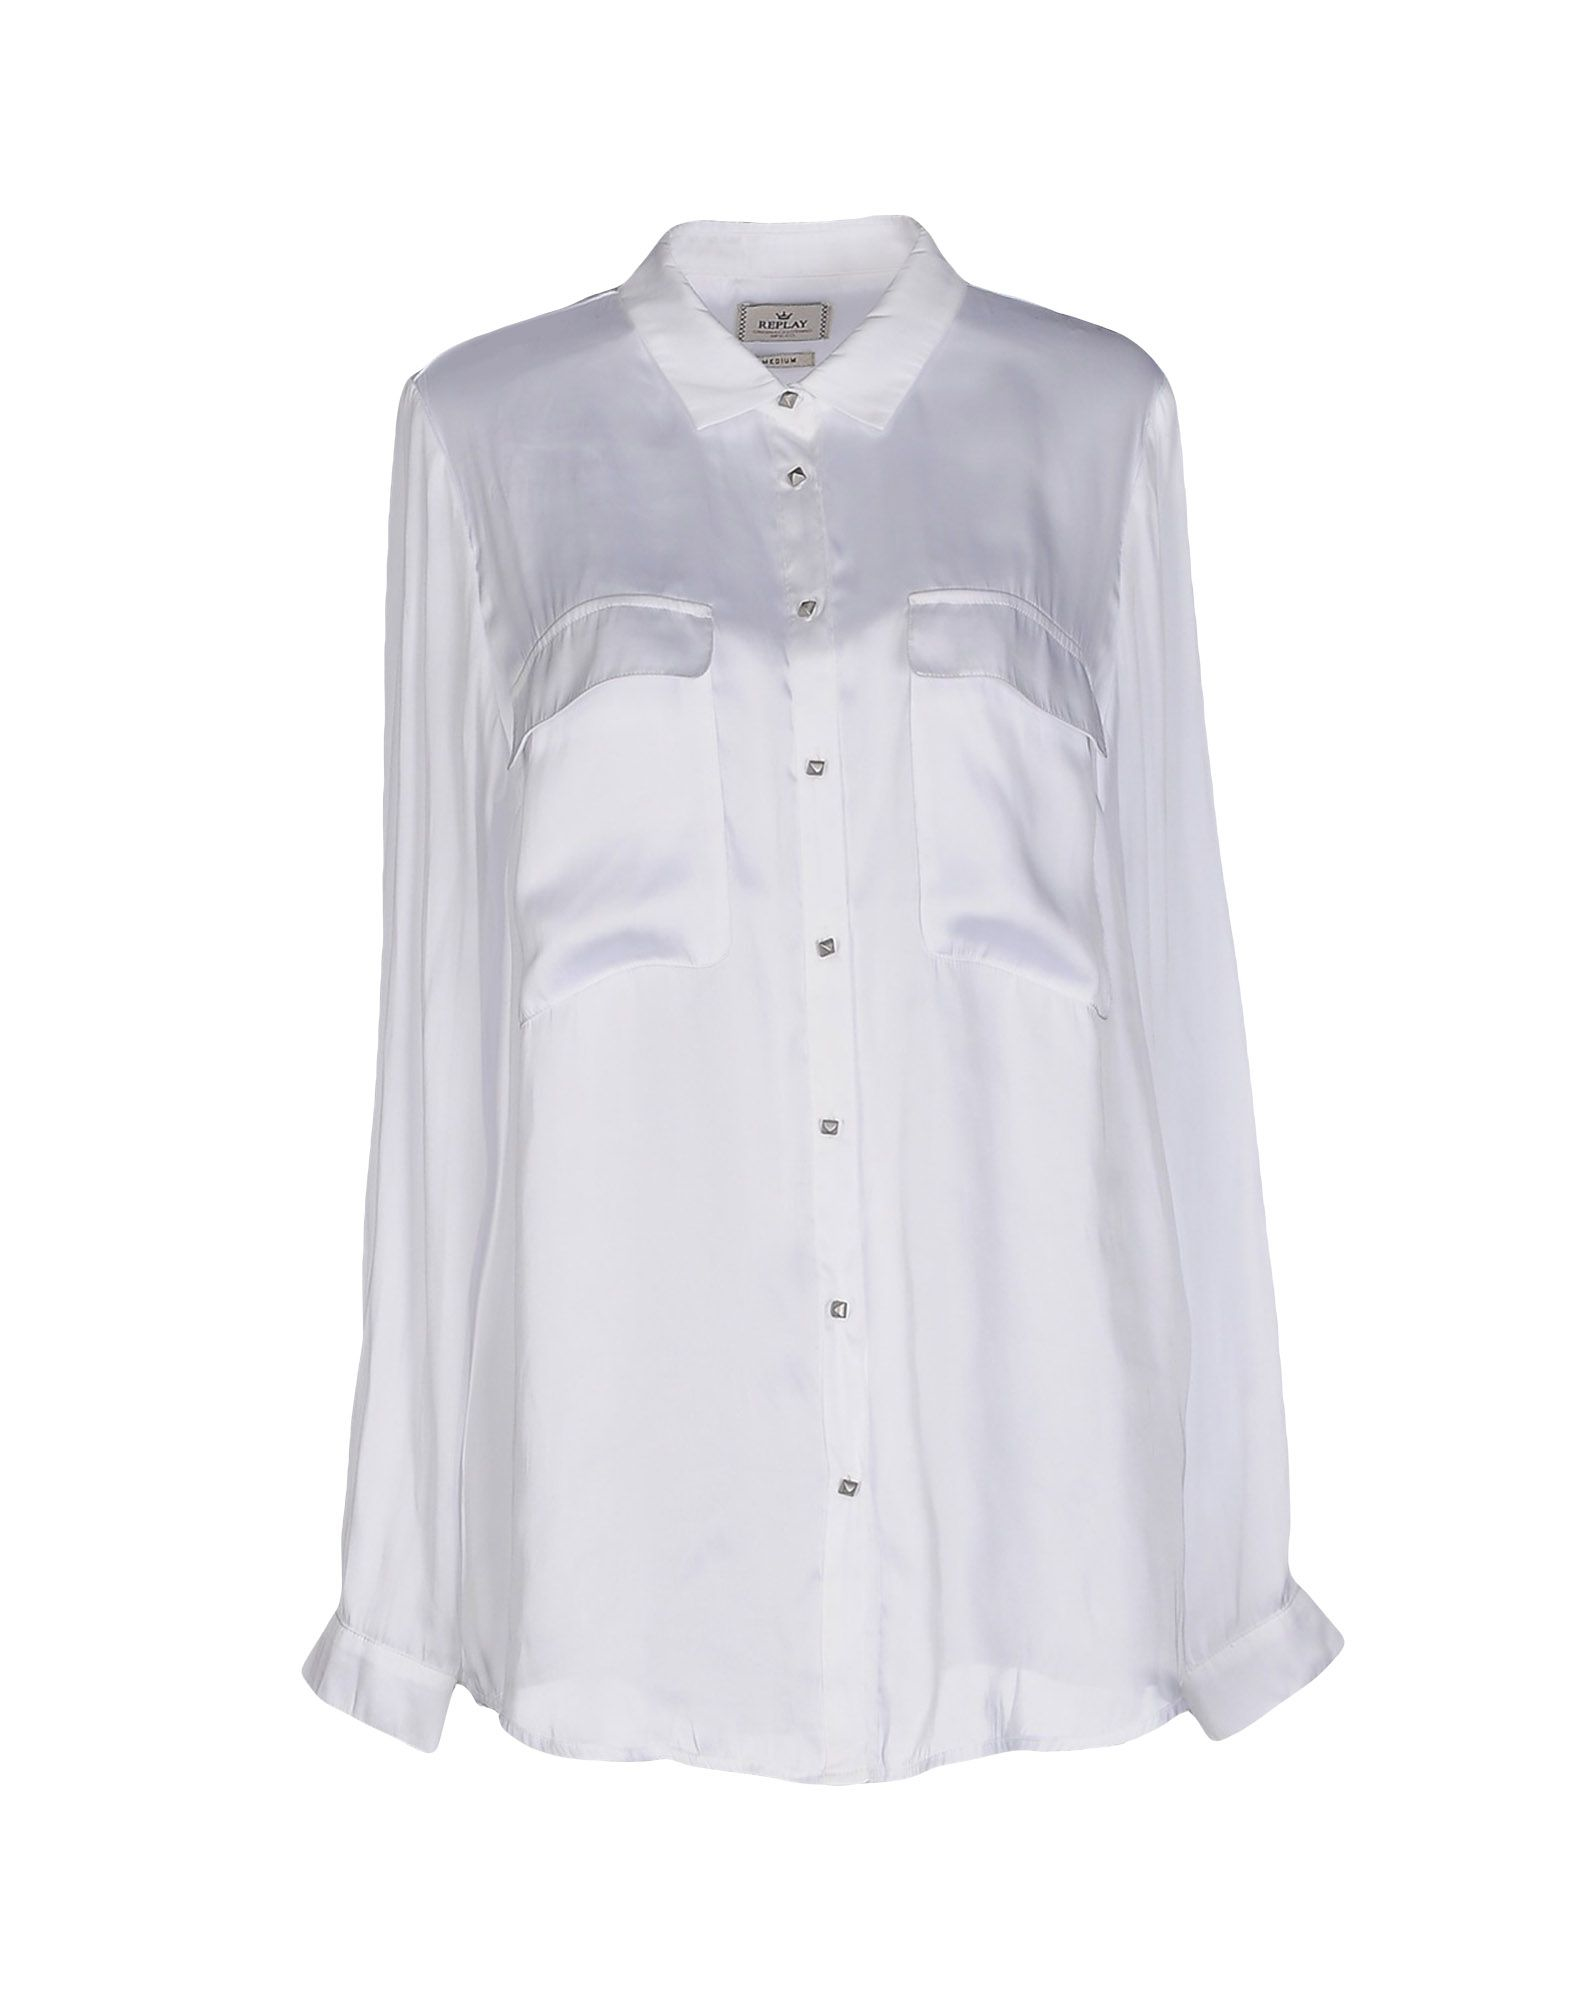 Lyst - Replay Shirt in White